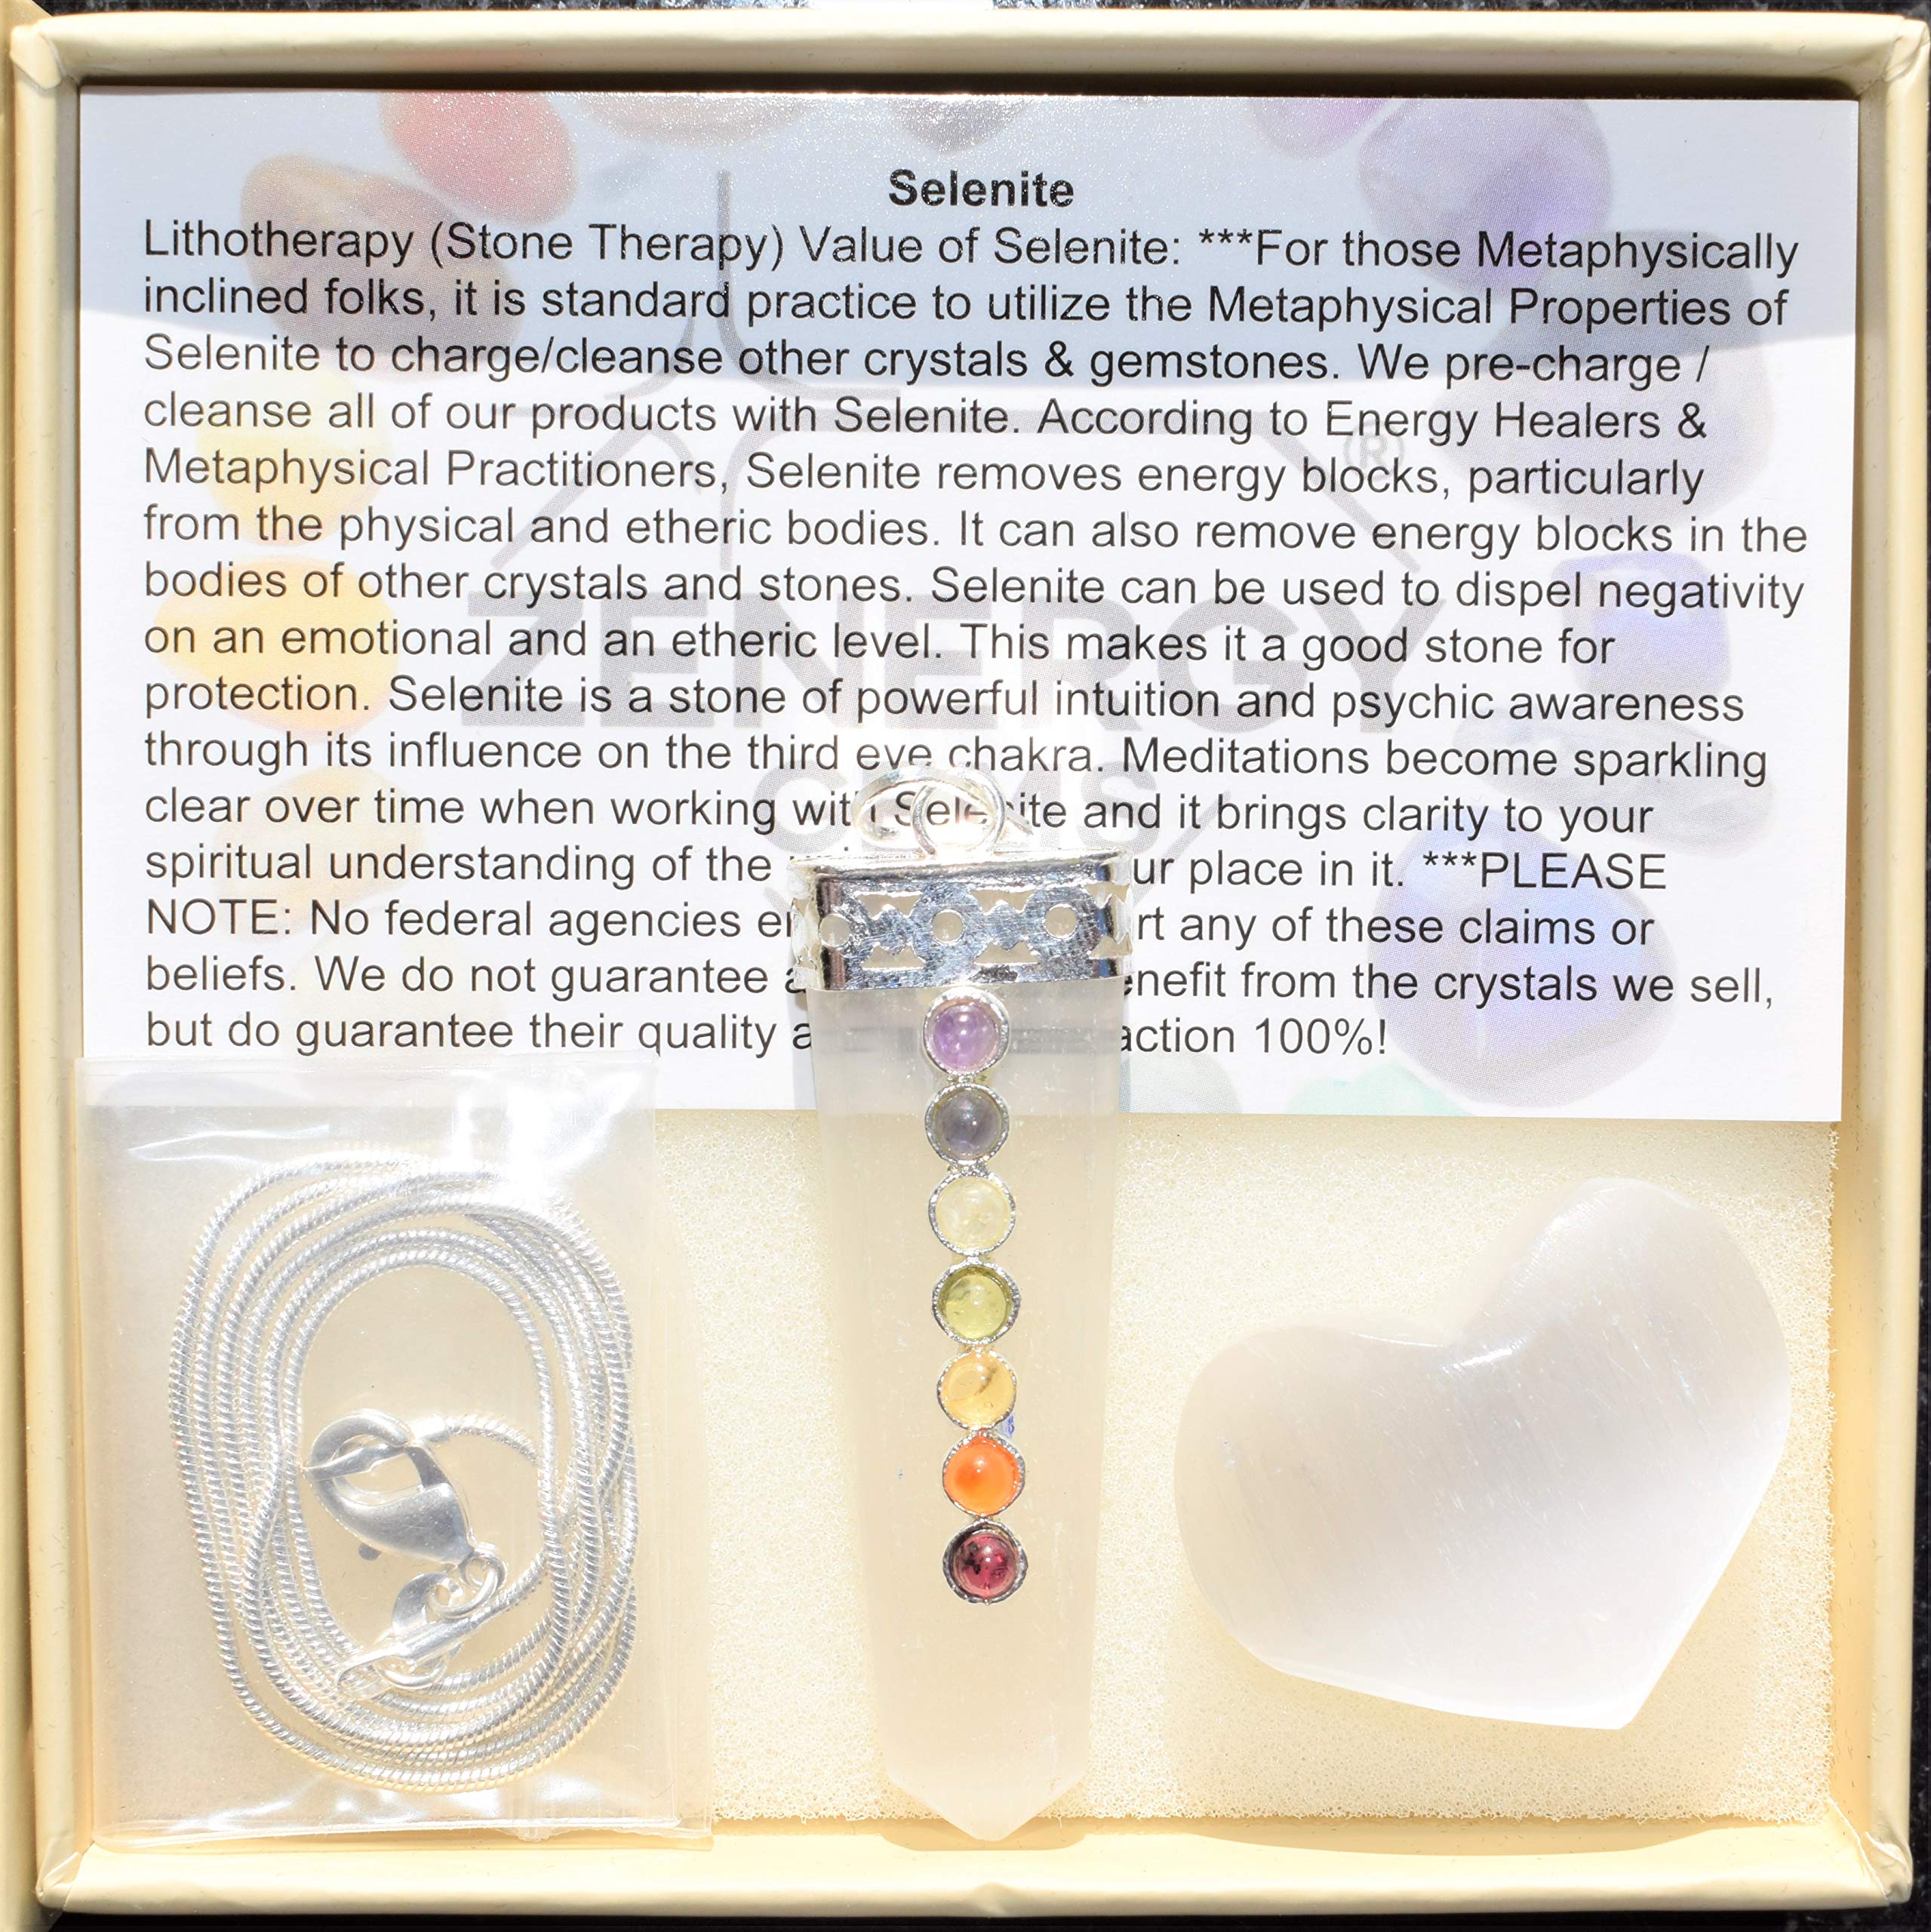 Zenergy Gems CHARGED 7 Chakra Natural Himalayan Gemstone Crystal Perfect Pendant + 20